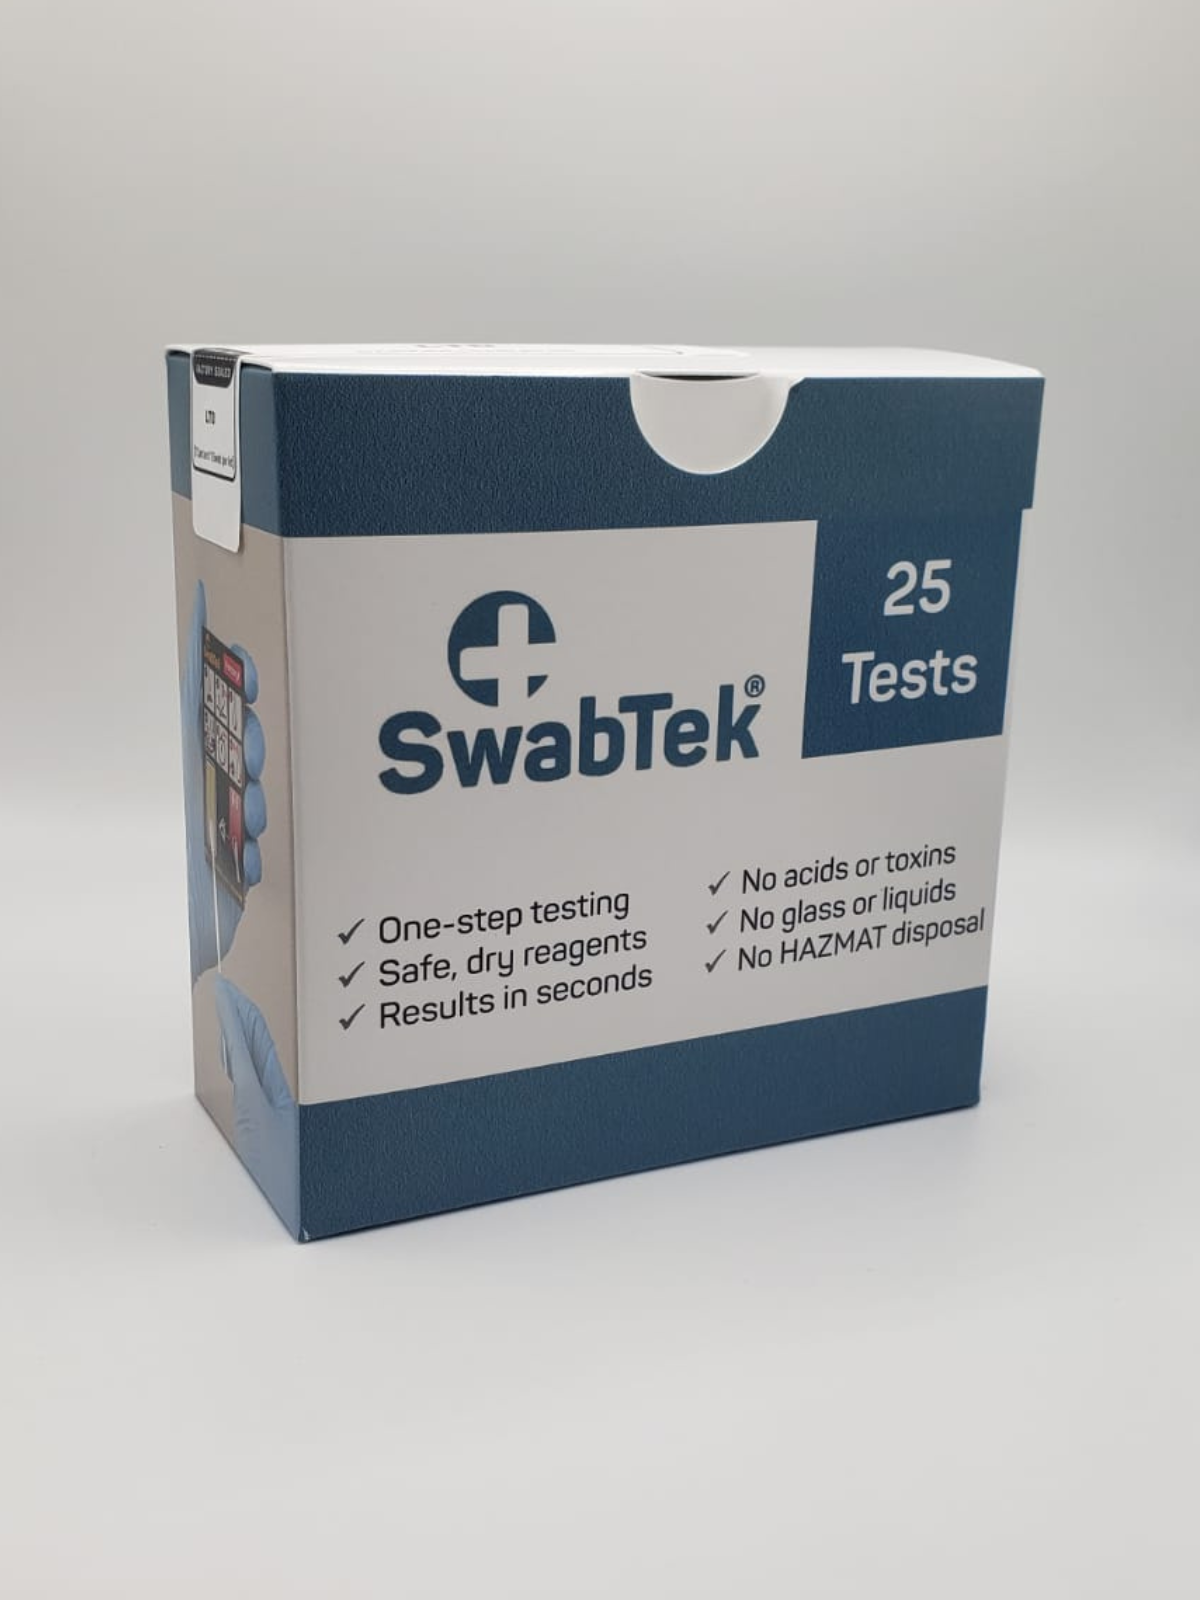 swabtek box of 25 cannabis/marijuana/THC detection test kit units